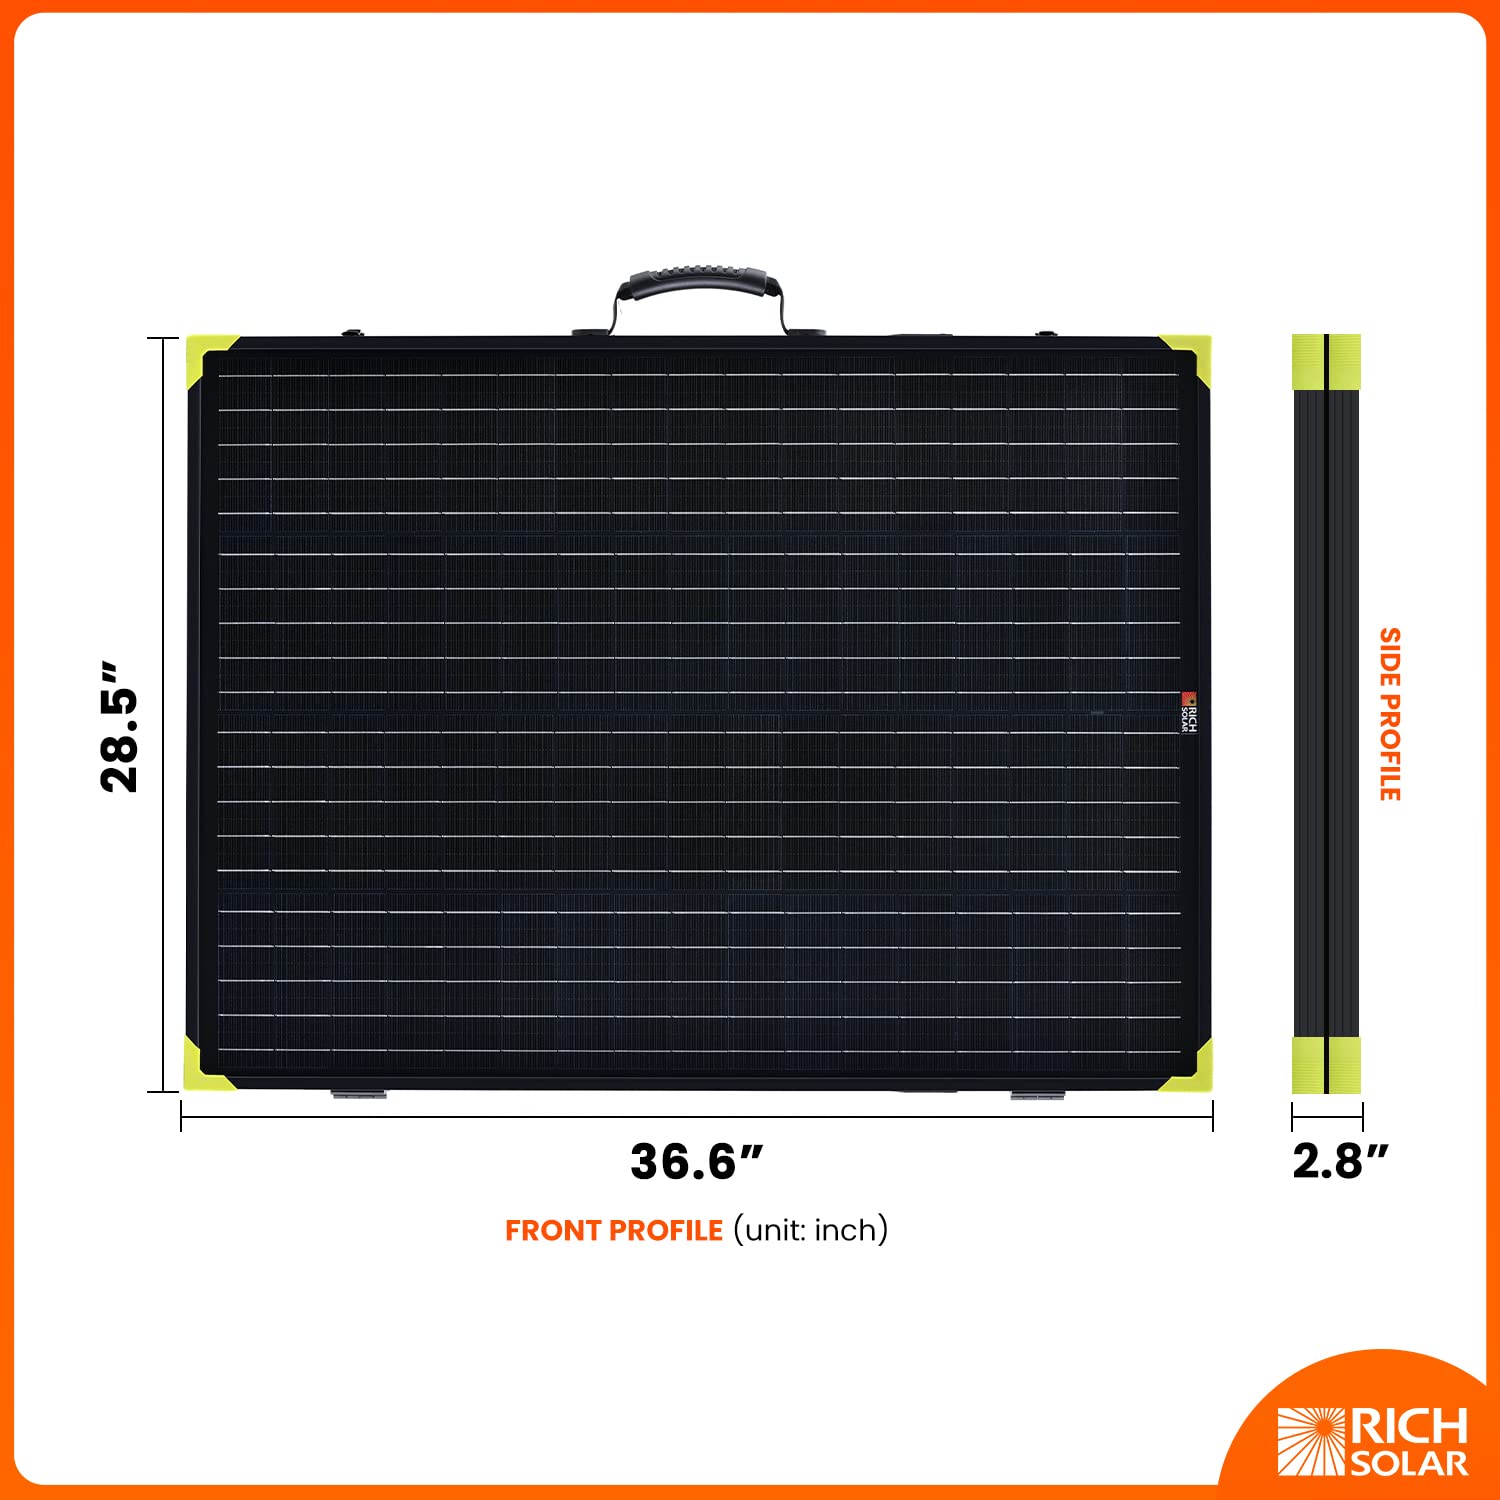 RICH SOLAR 200W Monocrystalline Portable Solar Panel Foldable Suitcase Solar Panel Built-in Kickstand (200W+20A Controller)